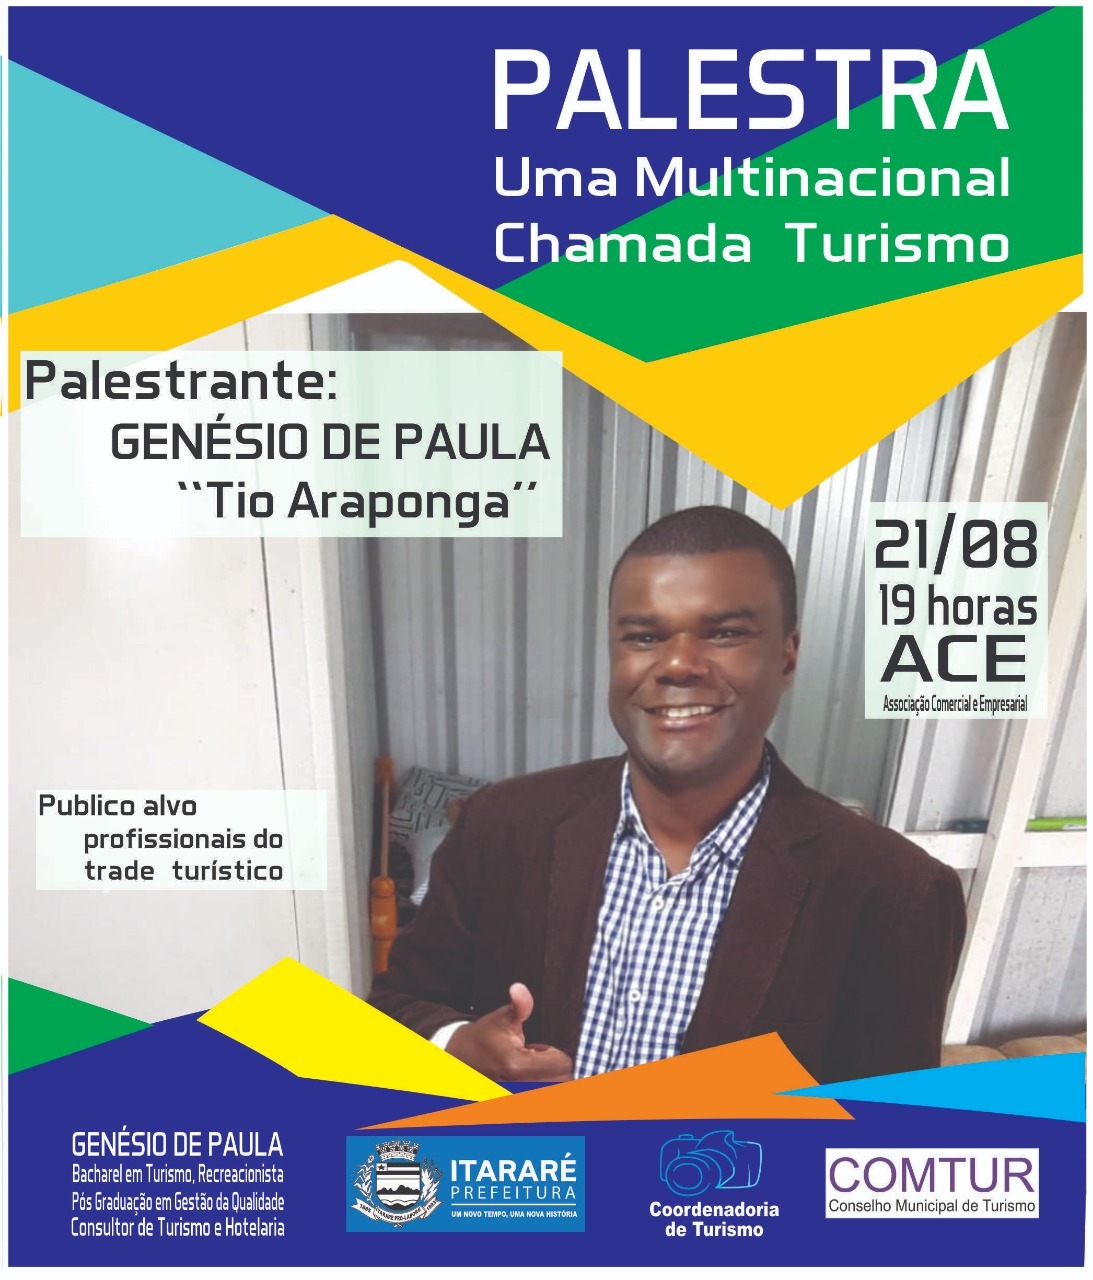 Prefeitura de Itararé (SP) promove palestra gratuita voltada ao trade turístico